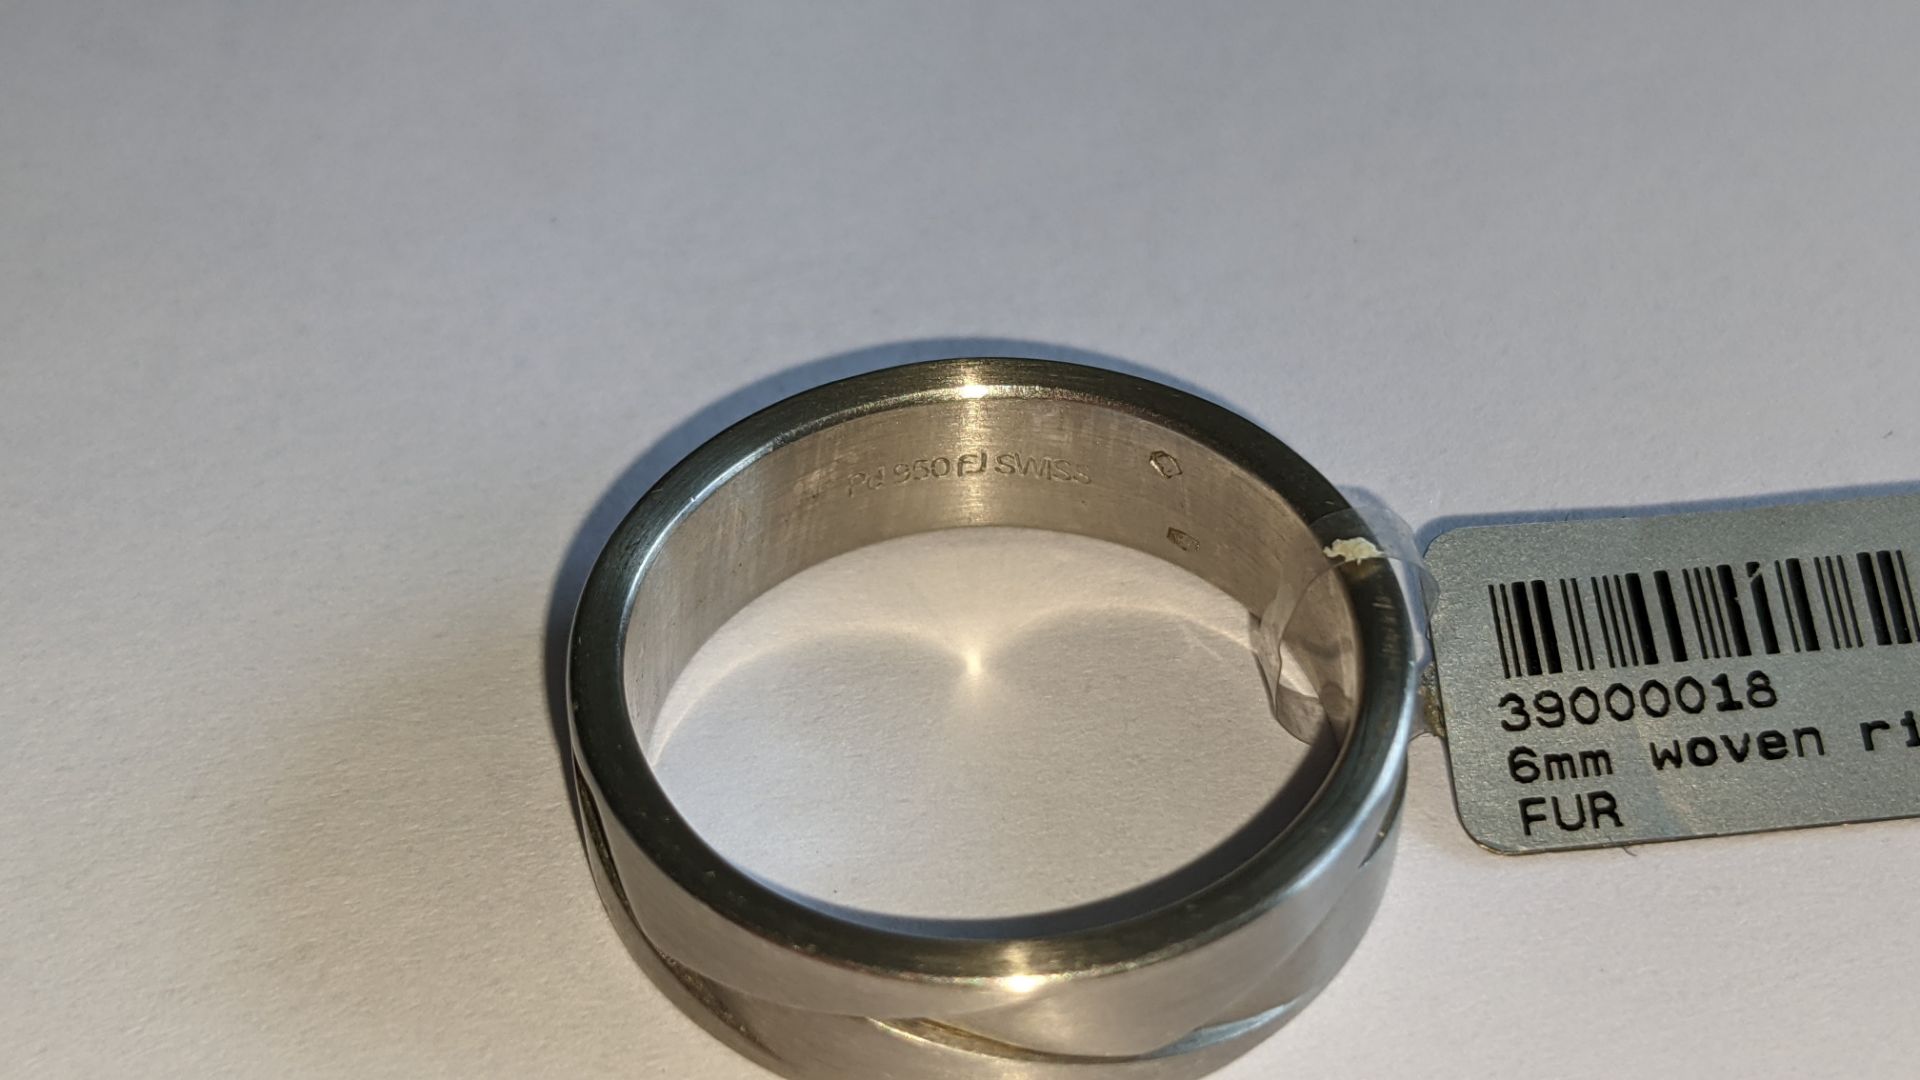 Palladium 950 6mm woven ring. RRP £925 - Image 9 of 14